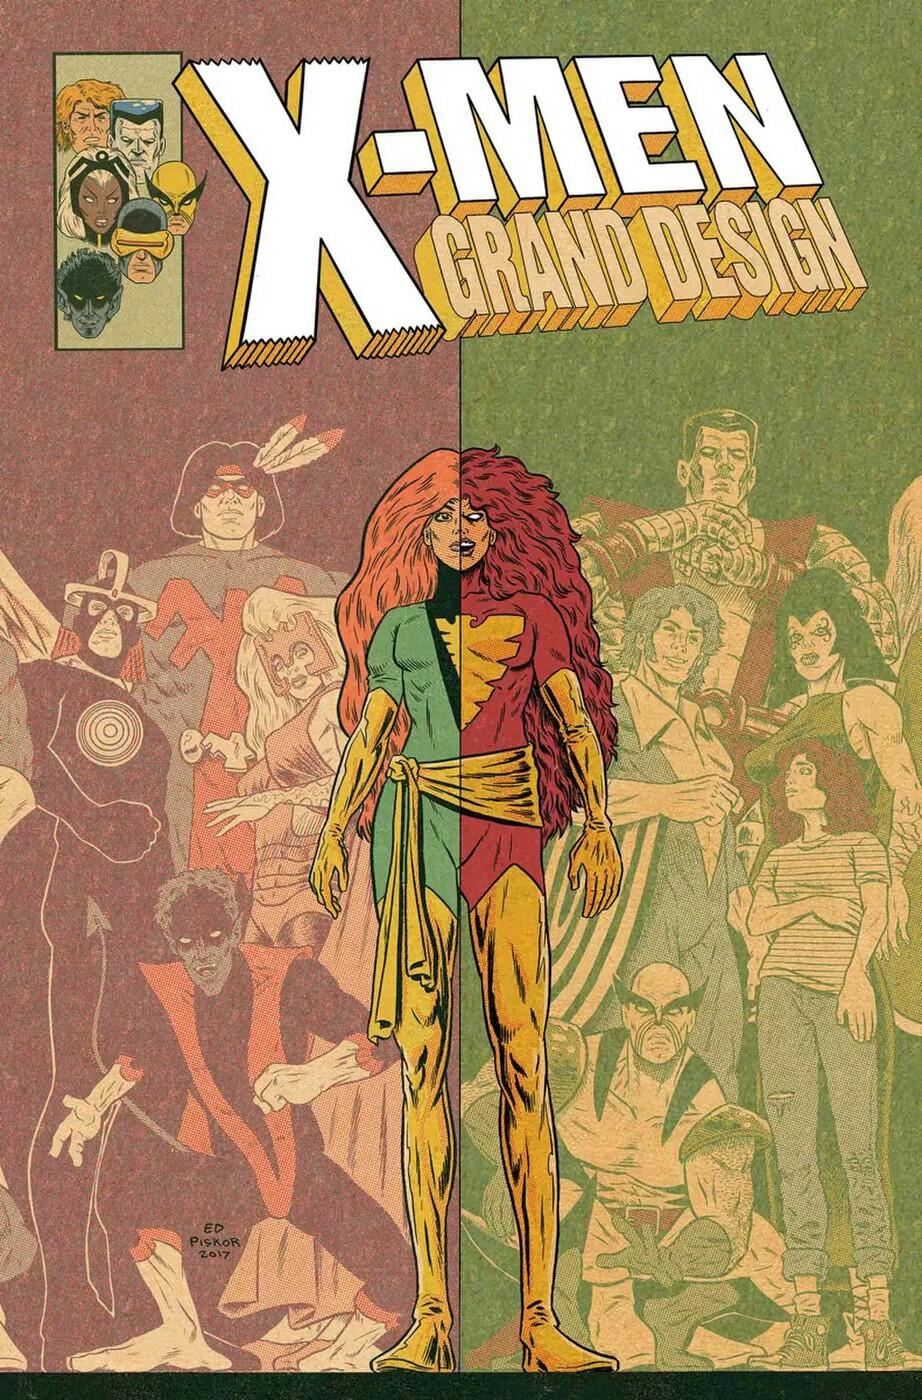 X-Men: Grand Design - Second Genesis Vol. 1 #1